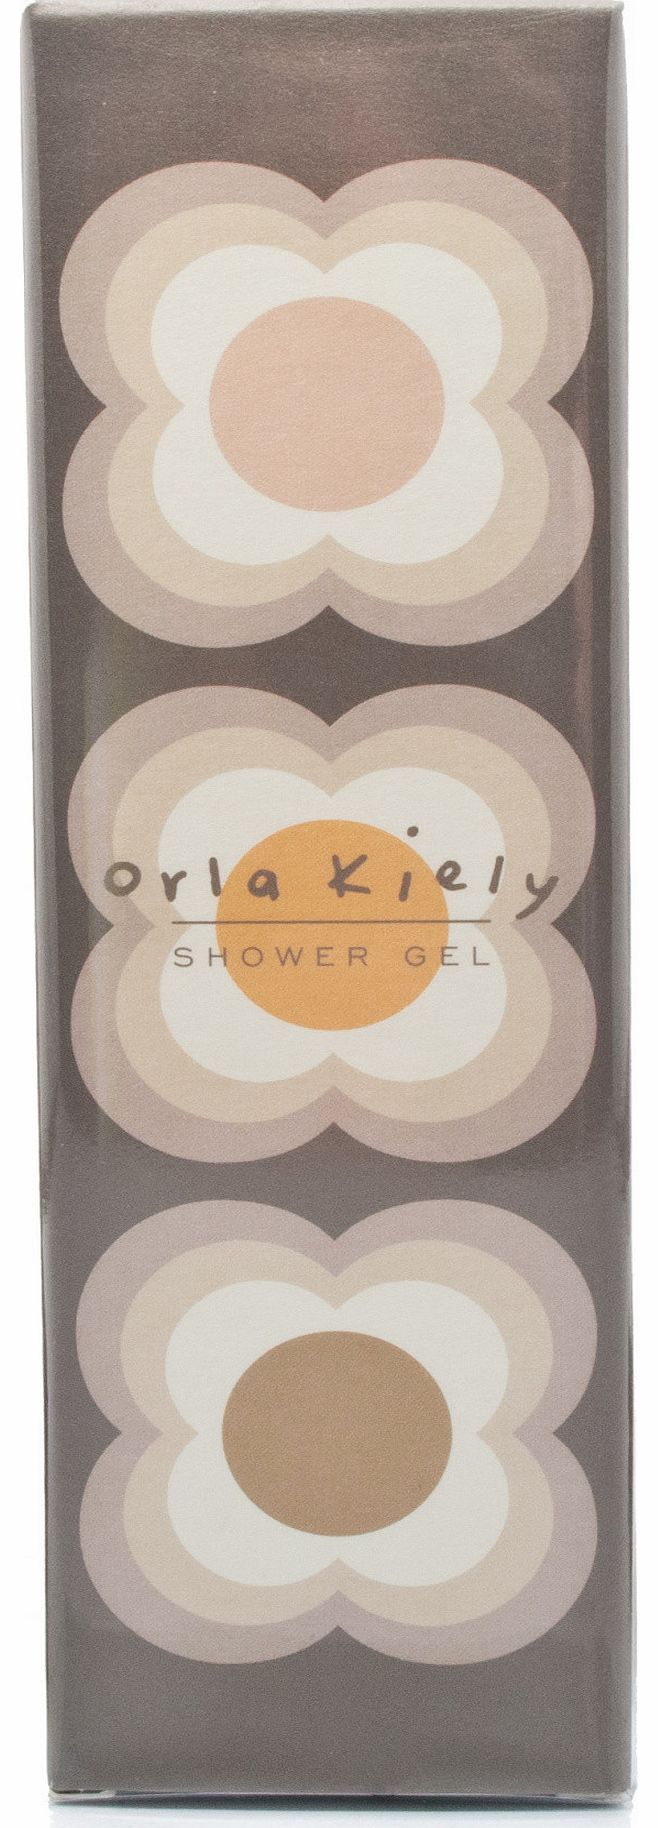 Orla Kiely Shower Gel